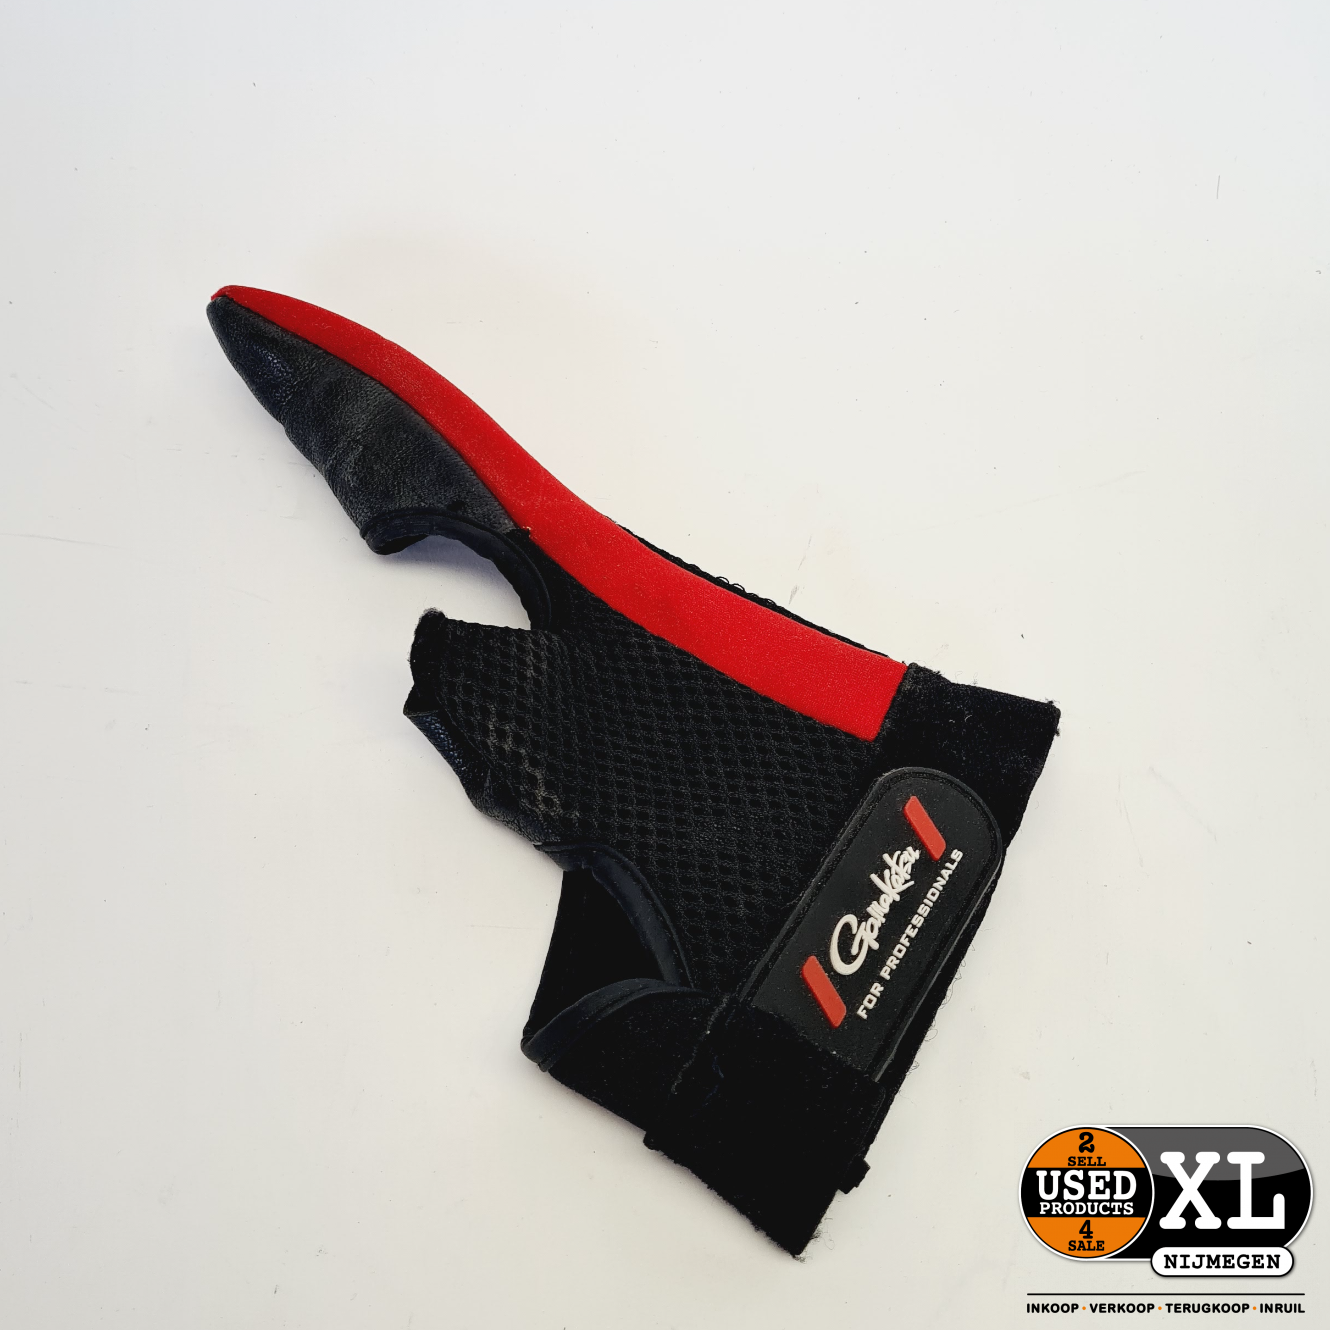 Gamakatsu Casting Protection Glove  incl Garantie - Used Products Nijmegen  XL